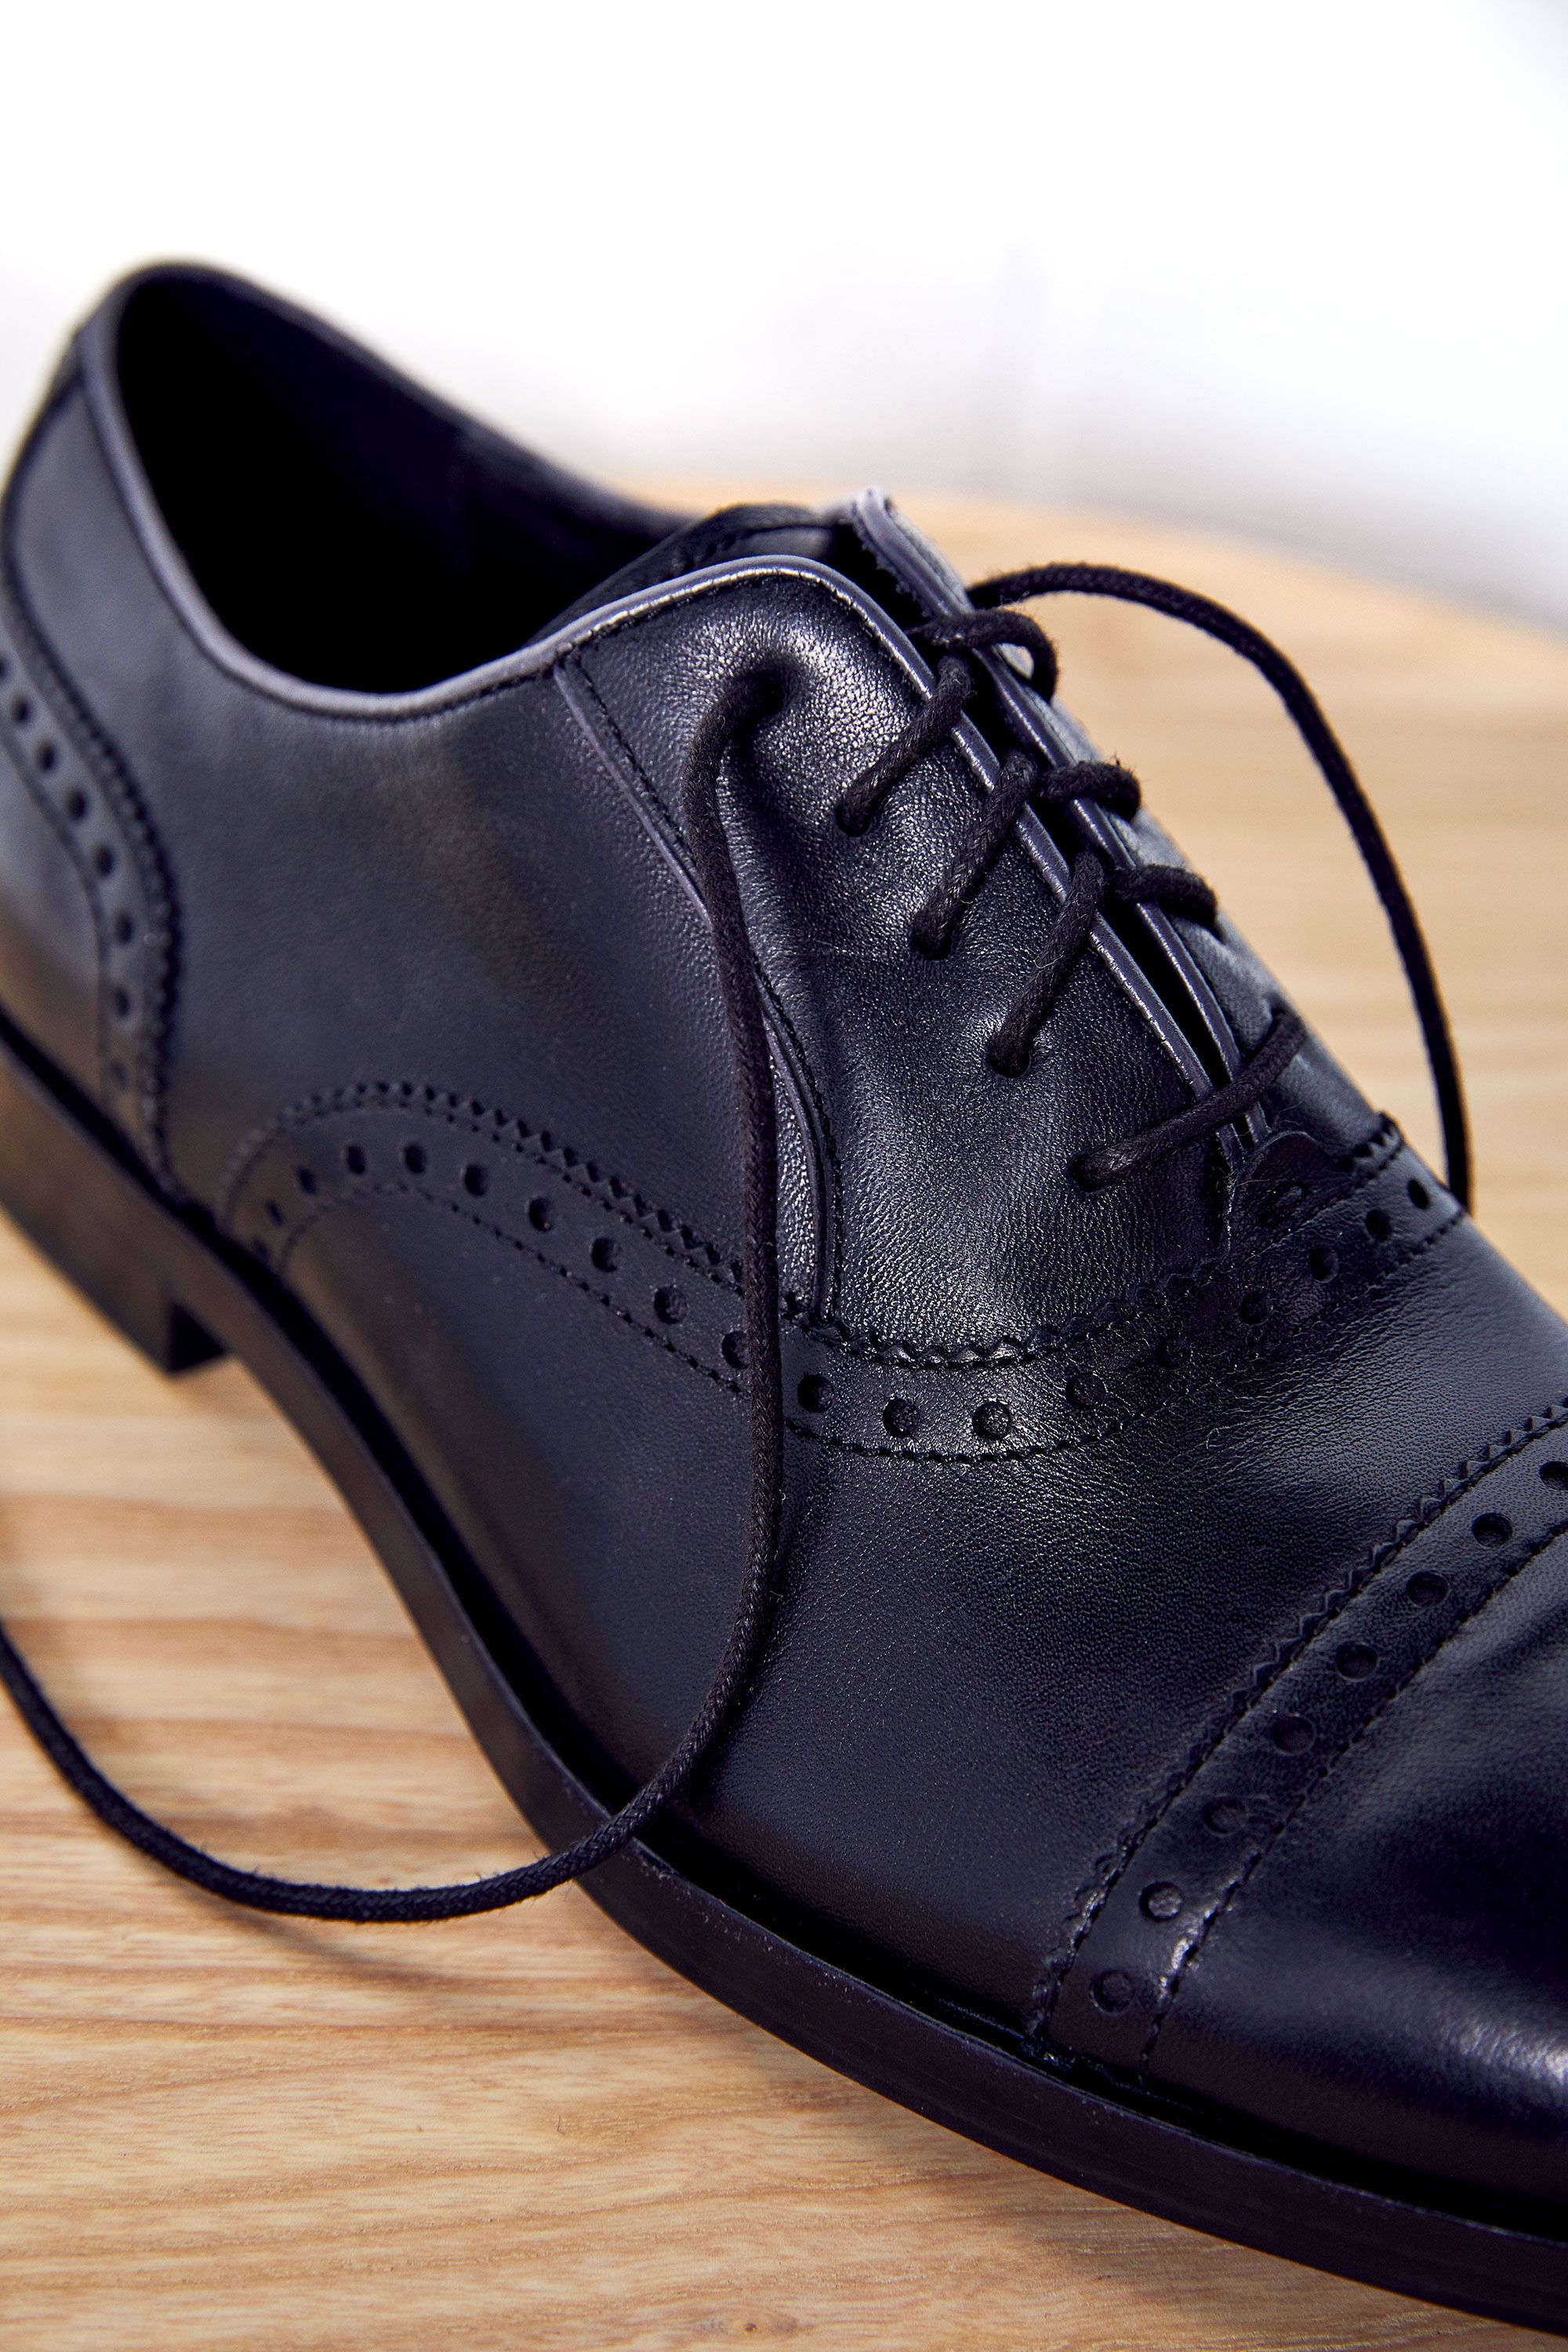 ZTA Men's Business Modern Toe Shoes Oxford Leather Dress Shoes Lace-Up Black 